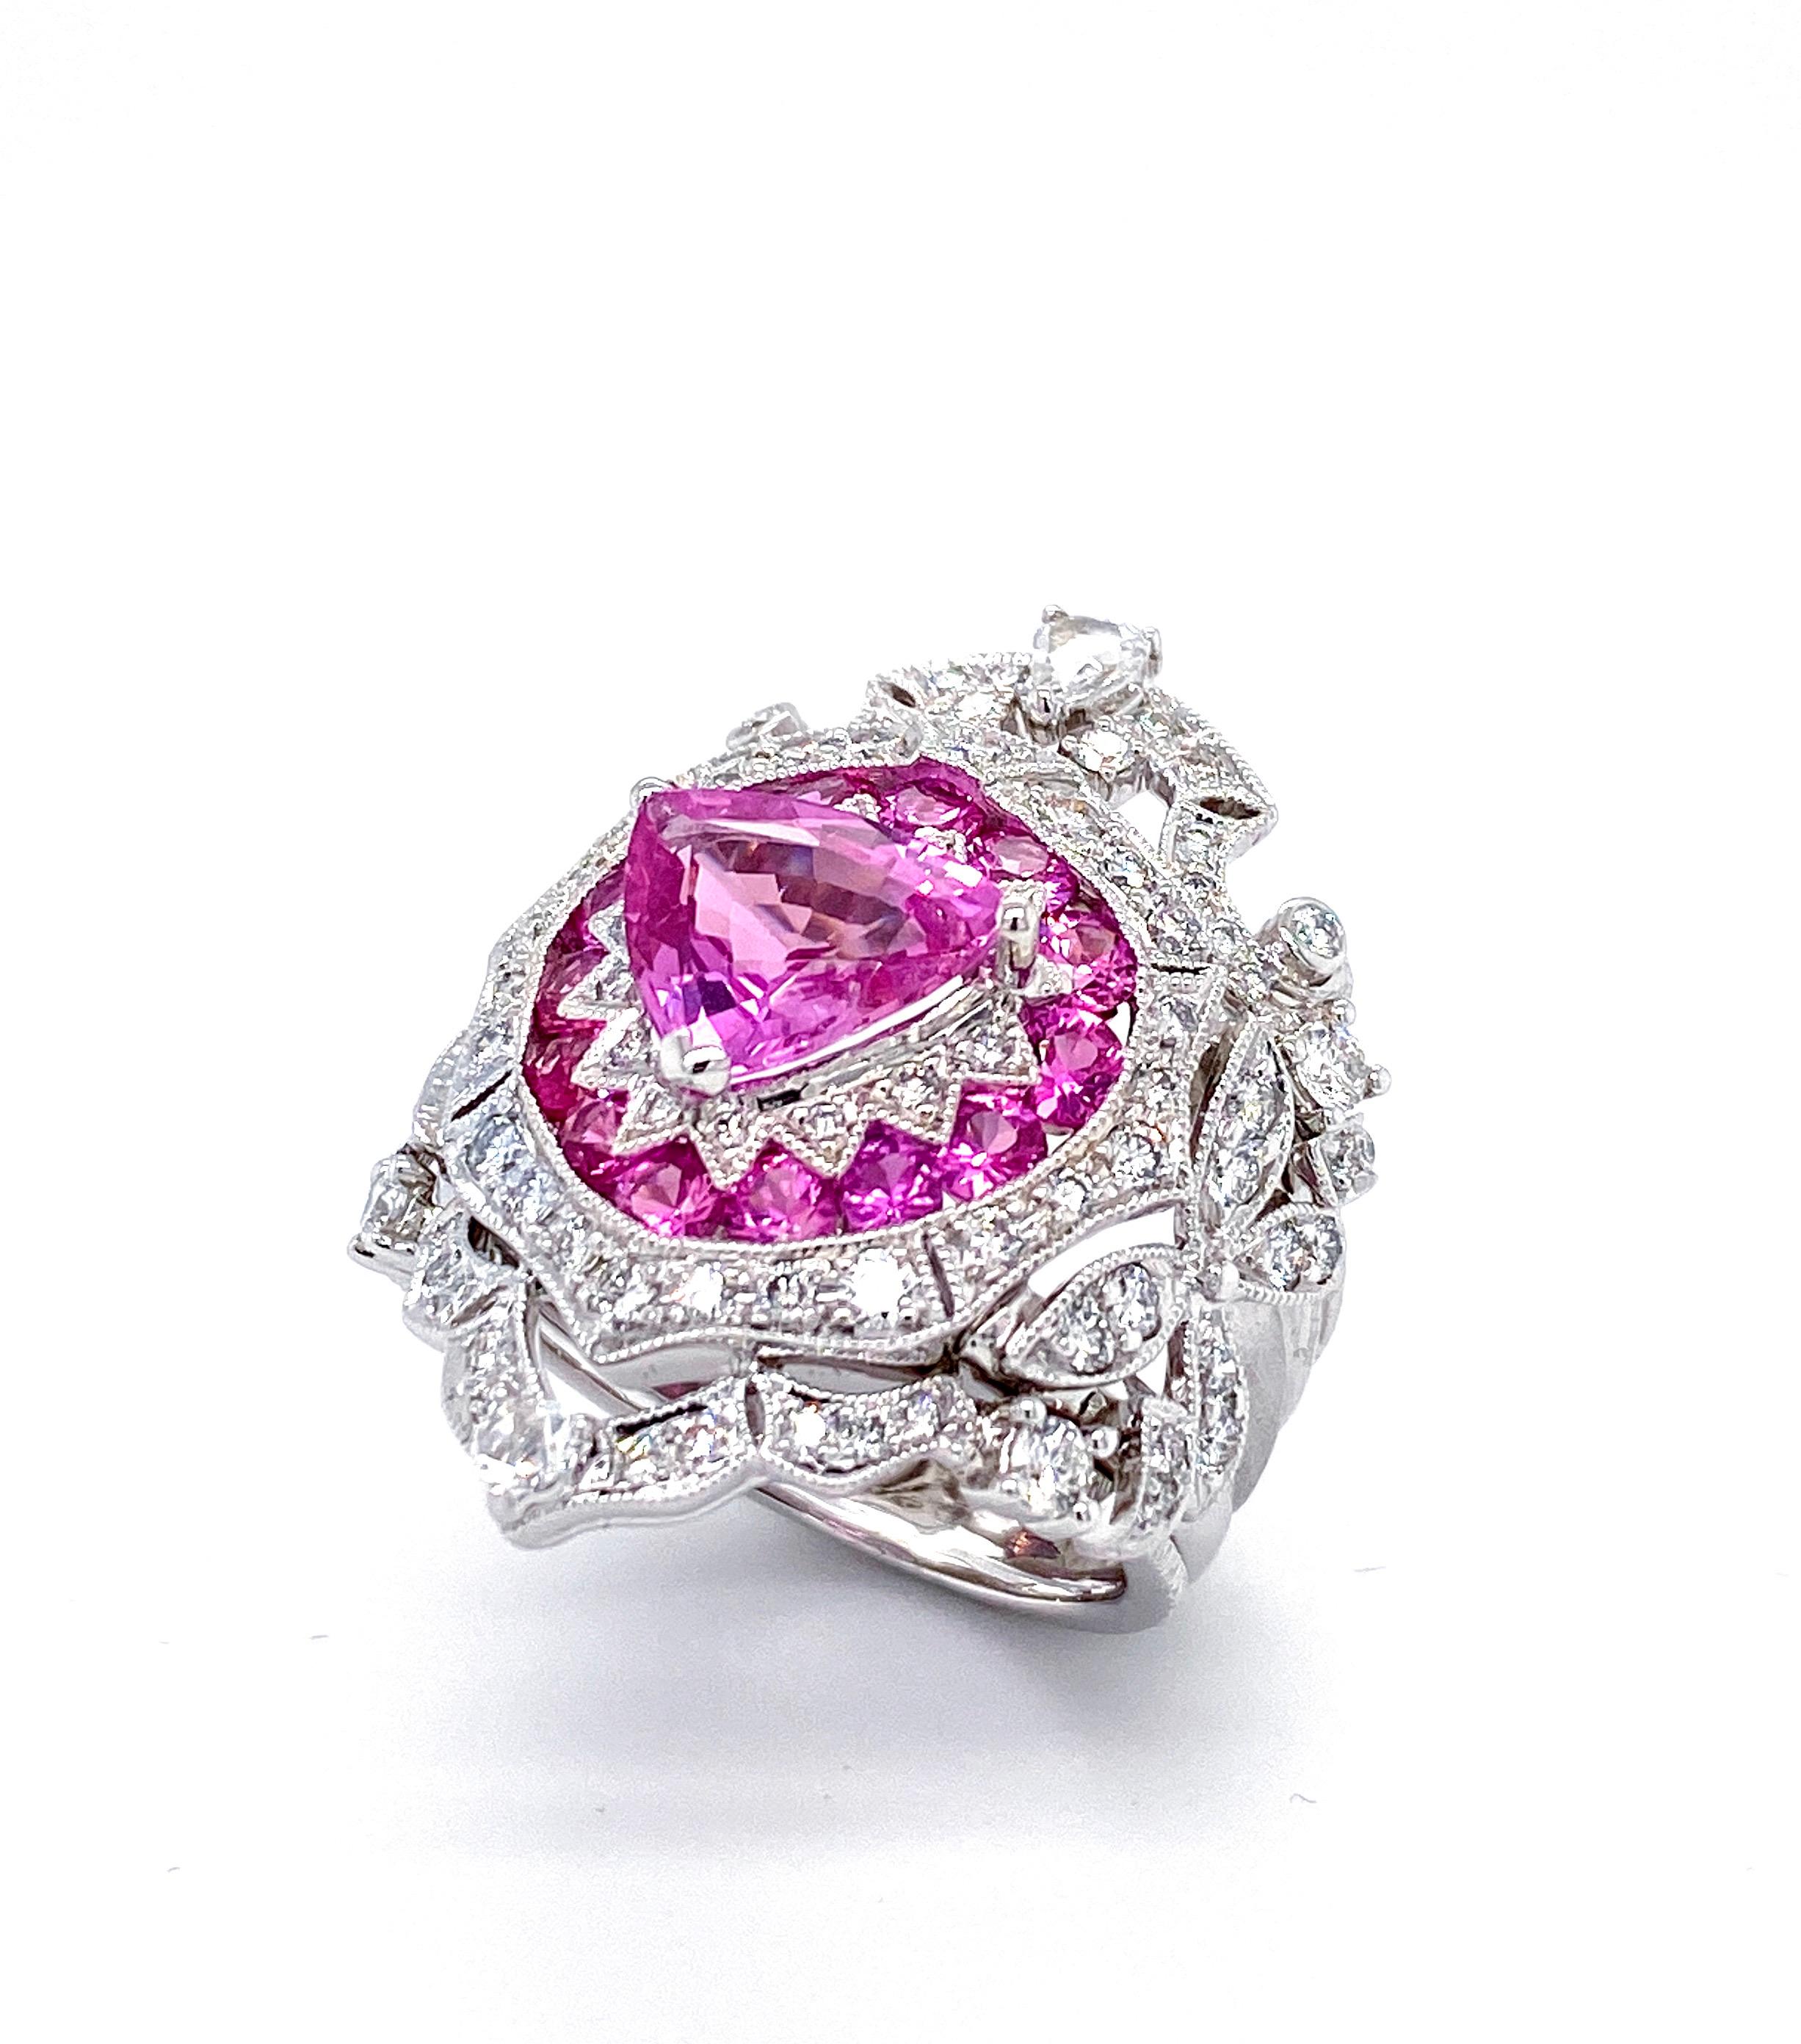 Women's or Men's Art Deco Inspired Pink Sapphire and Diamond Ring in 18 Karat White Gold